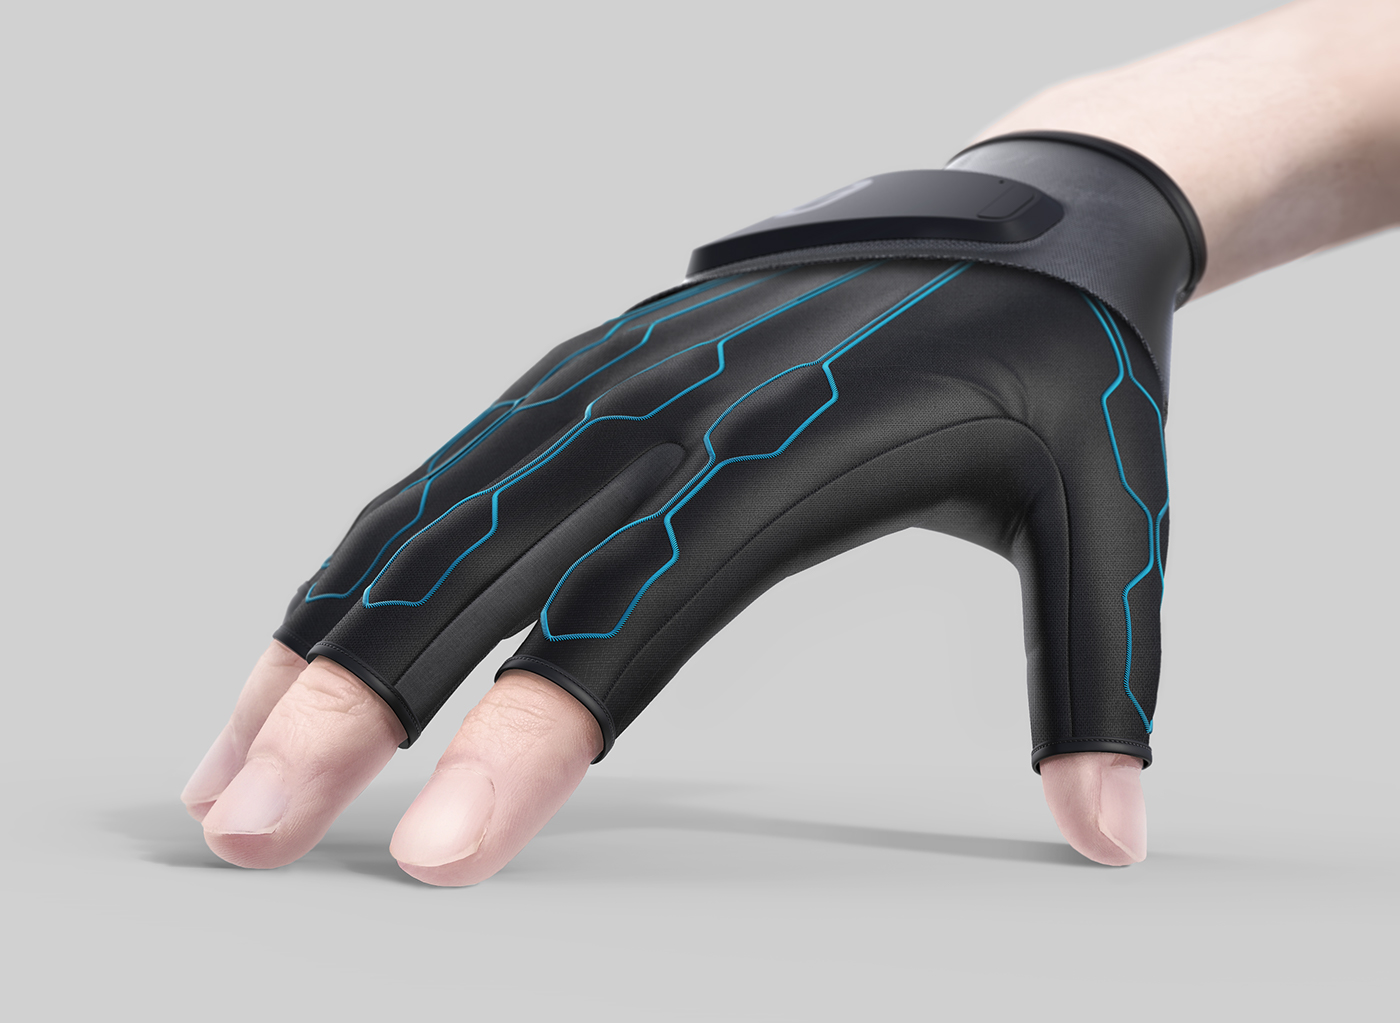 vr controller hand Glove Virtual reality bebop